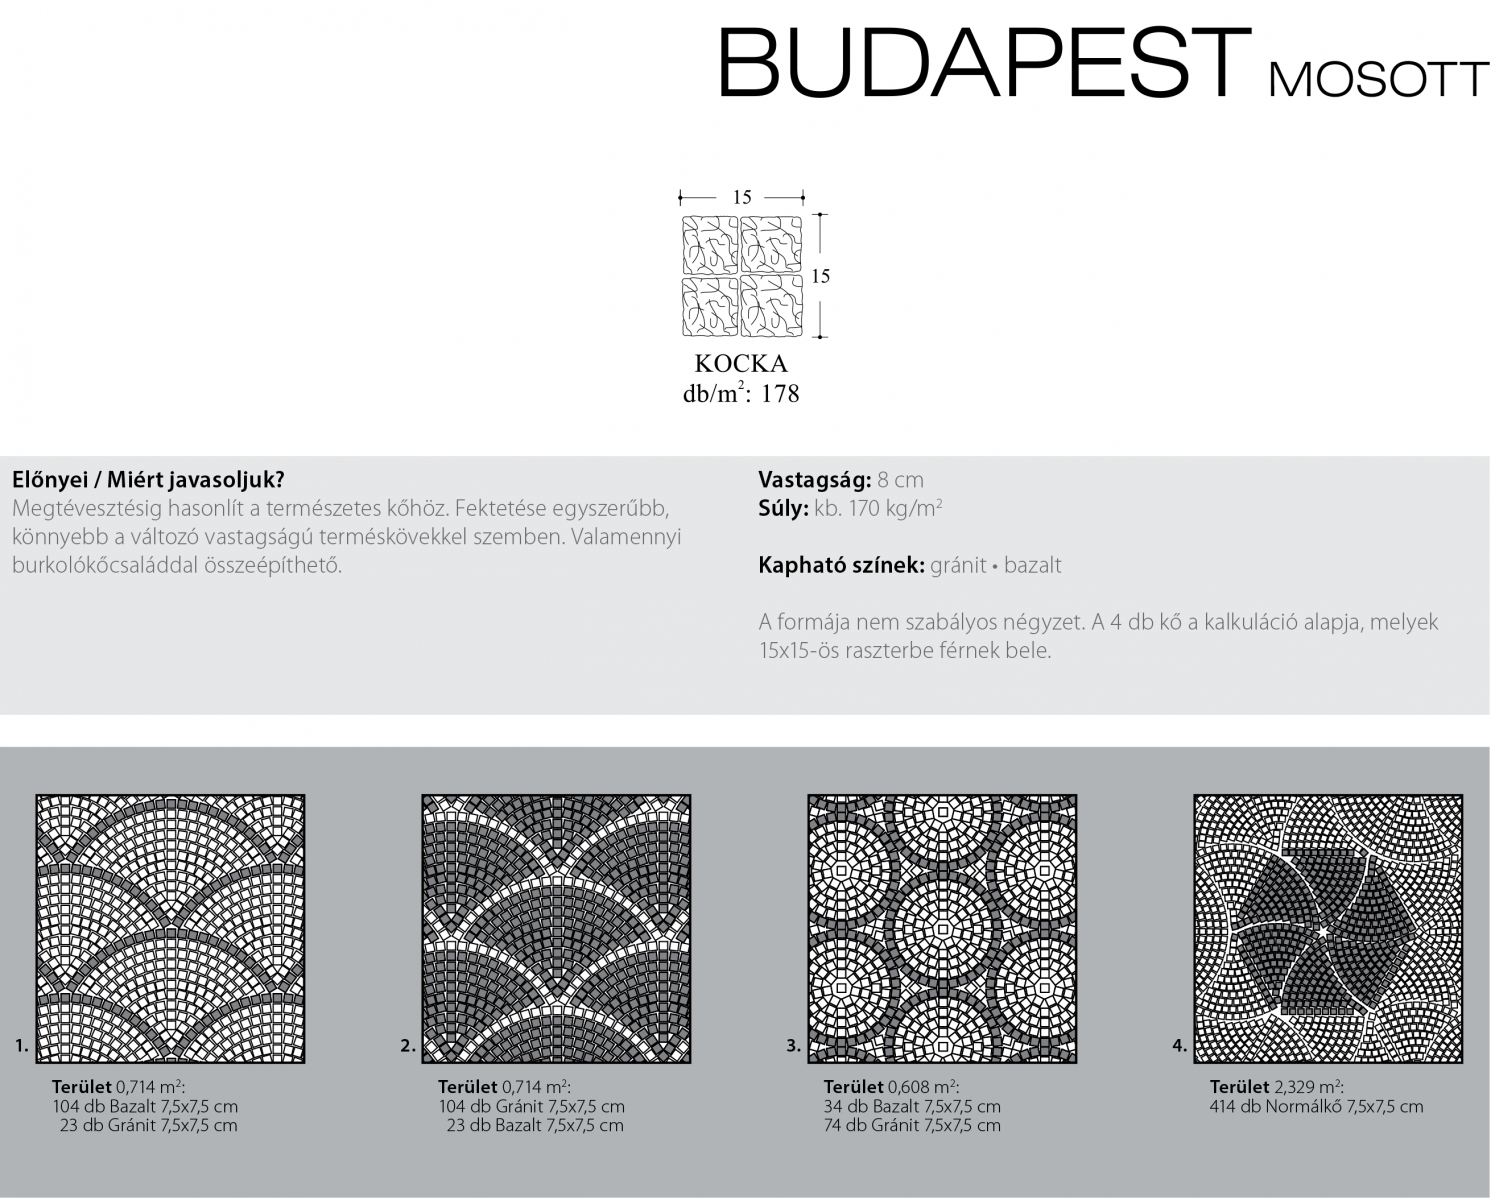 Budapest technikai információi